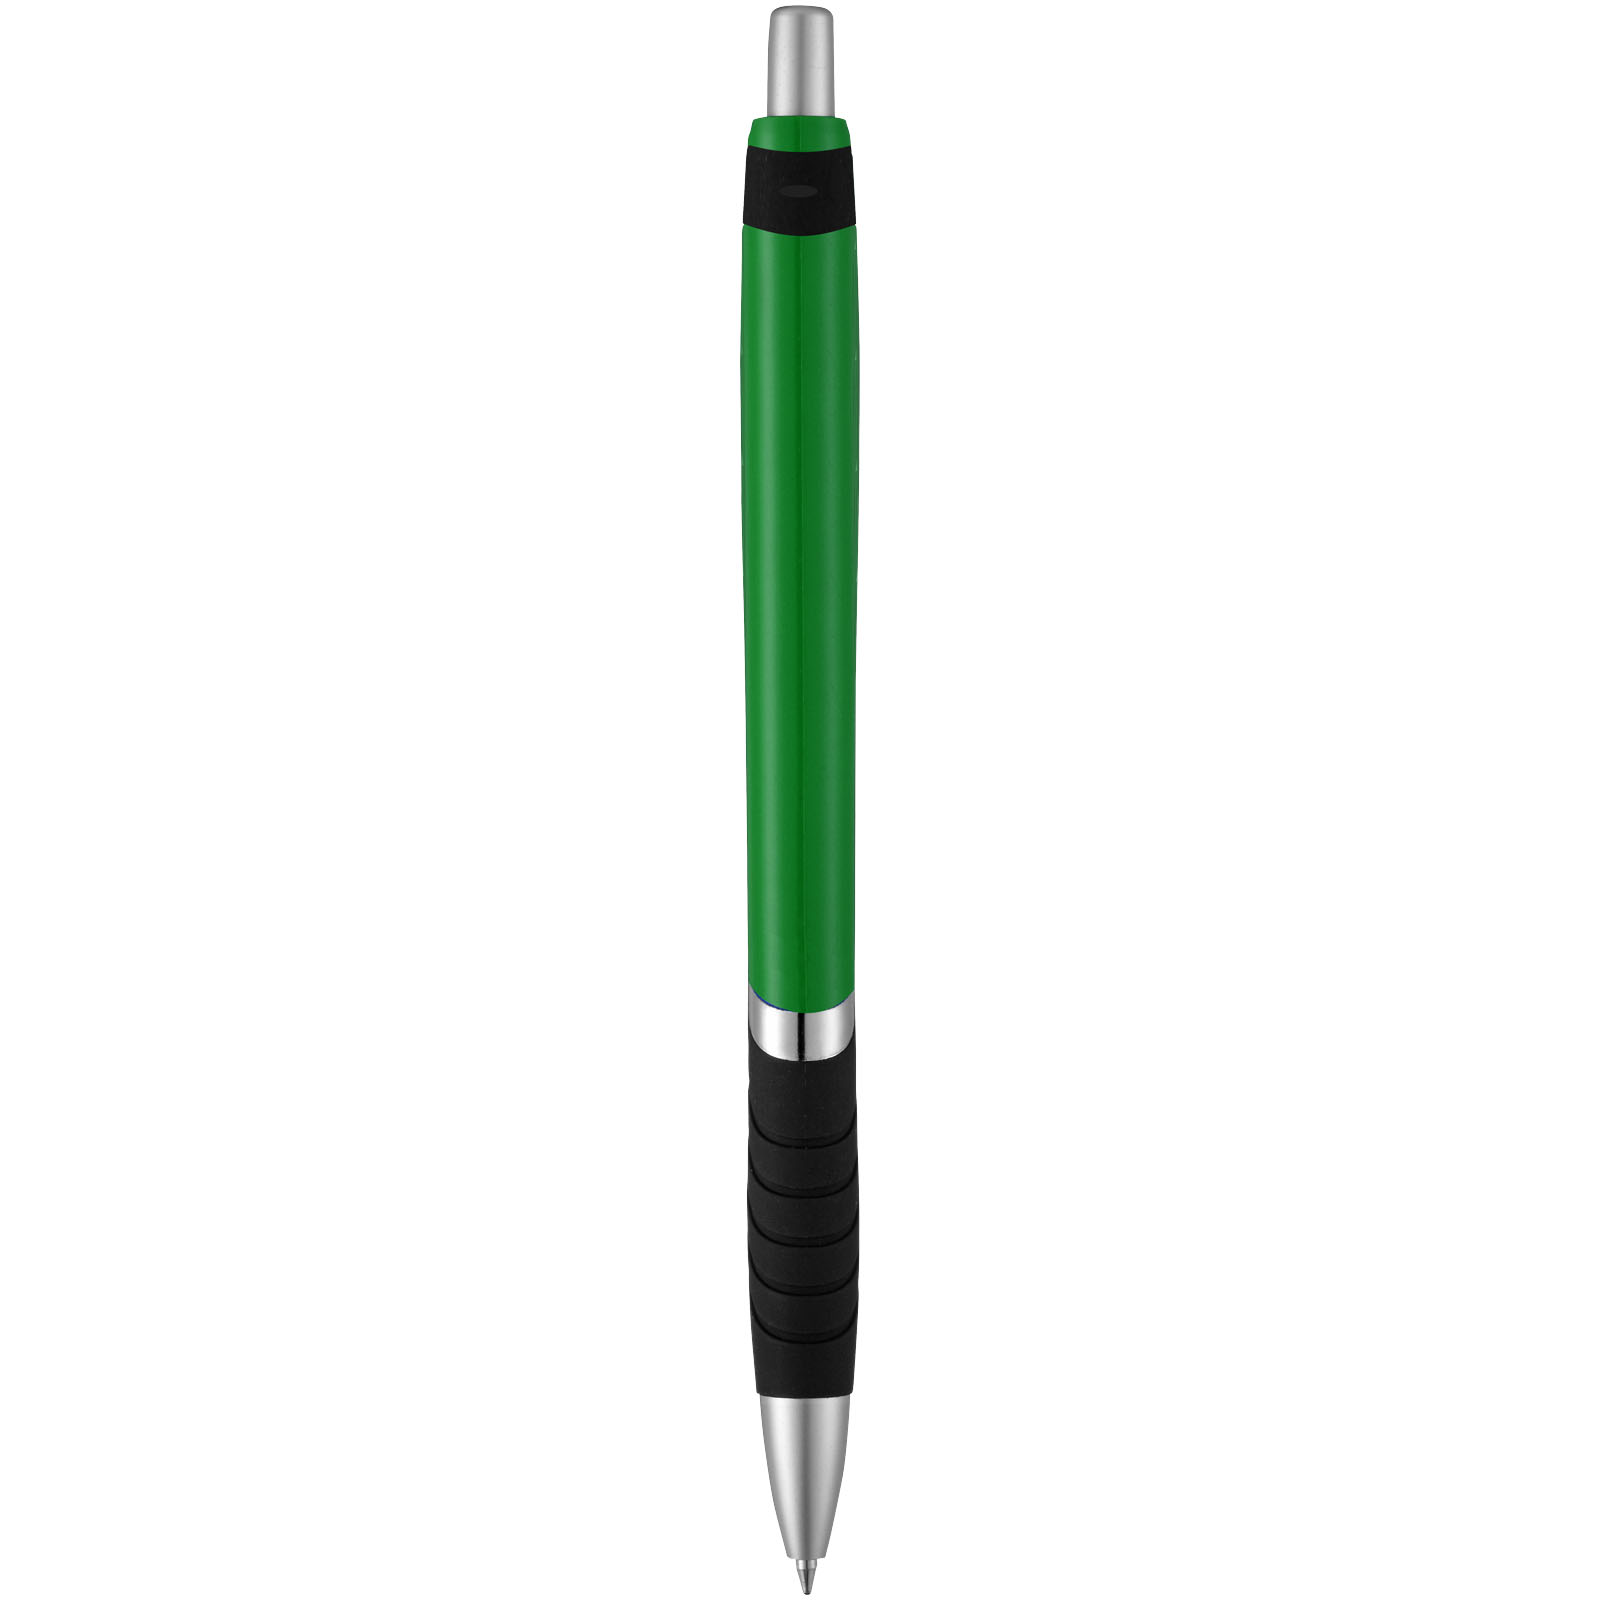 Advertising Ballpoint Pens - Turbo ballpoint pen with rubber grip - 2